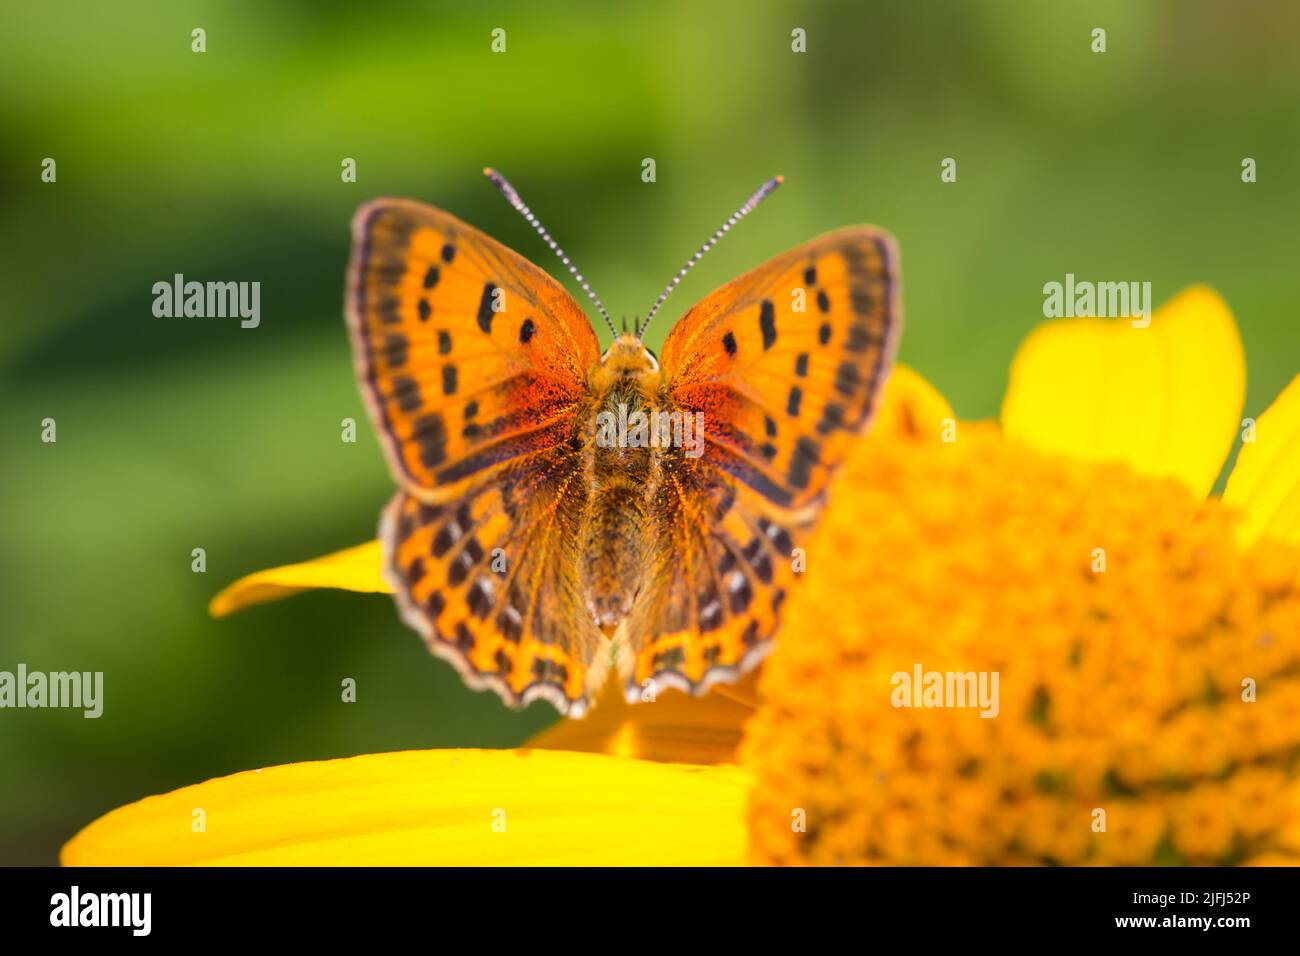 Mariposa naranja con manchas negras (Lepidoptera) Foto de stock